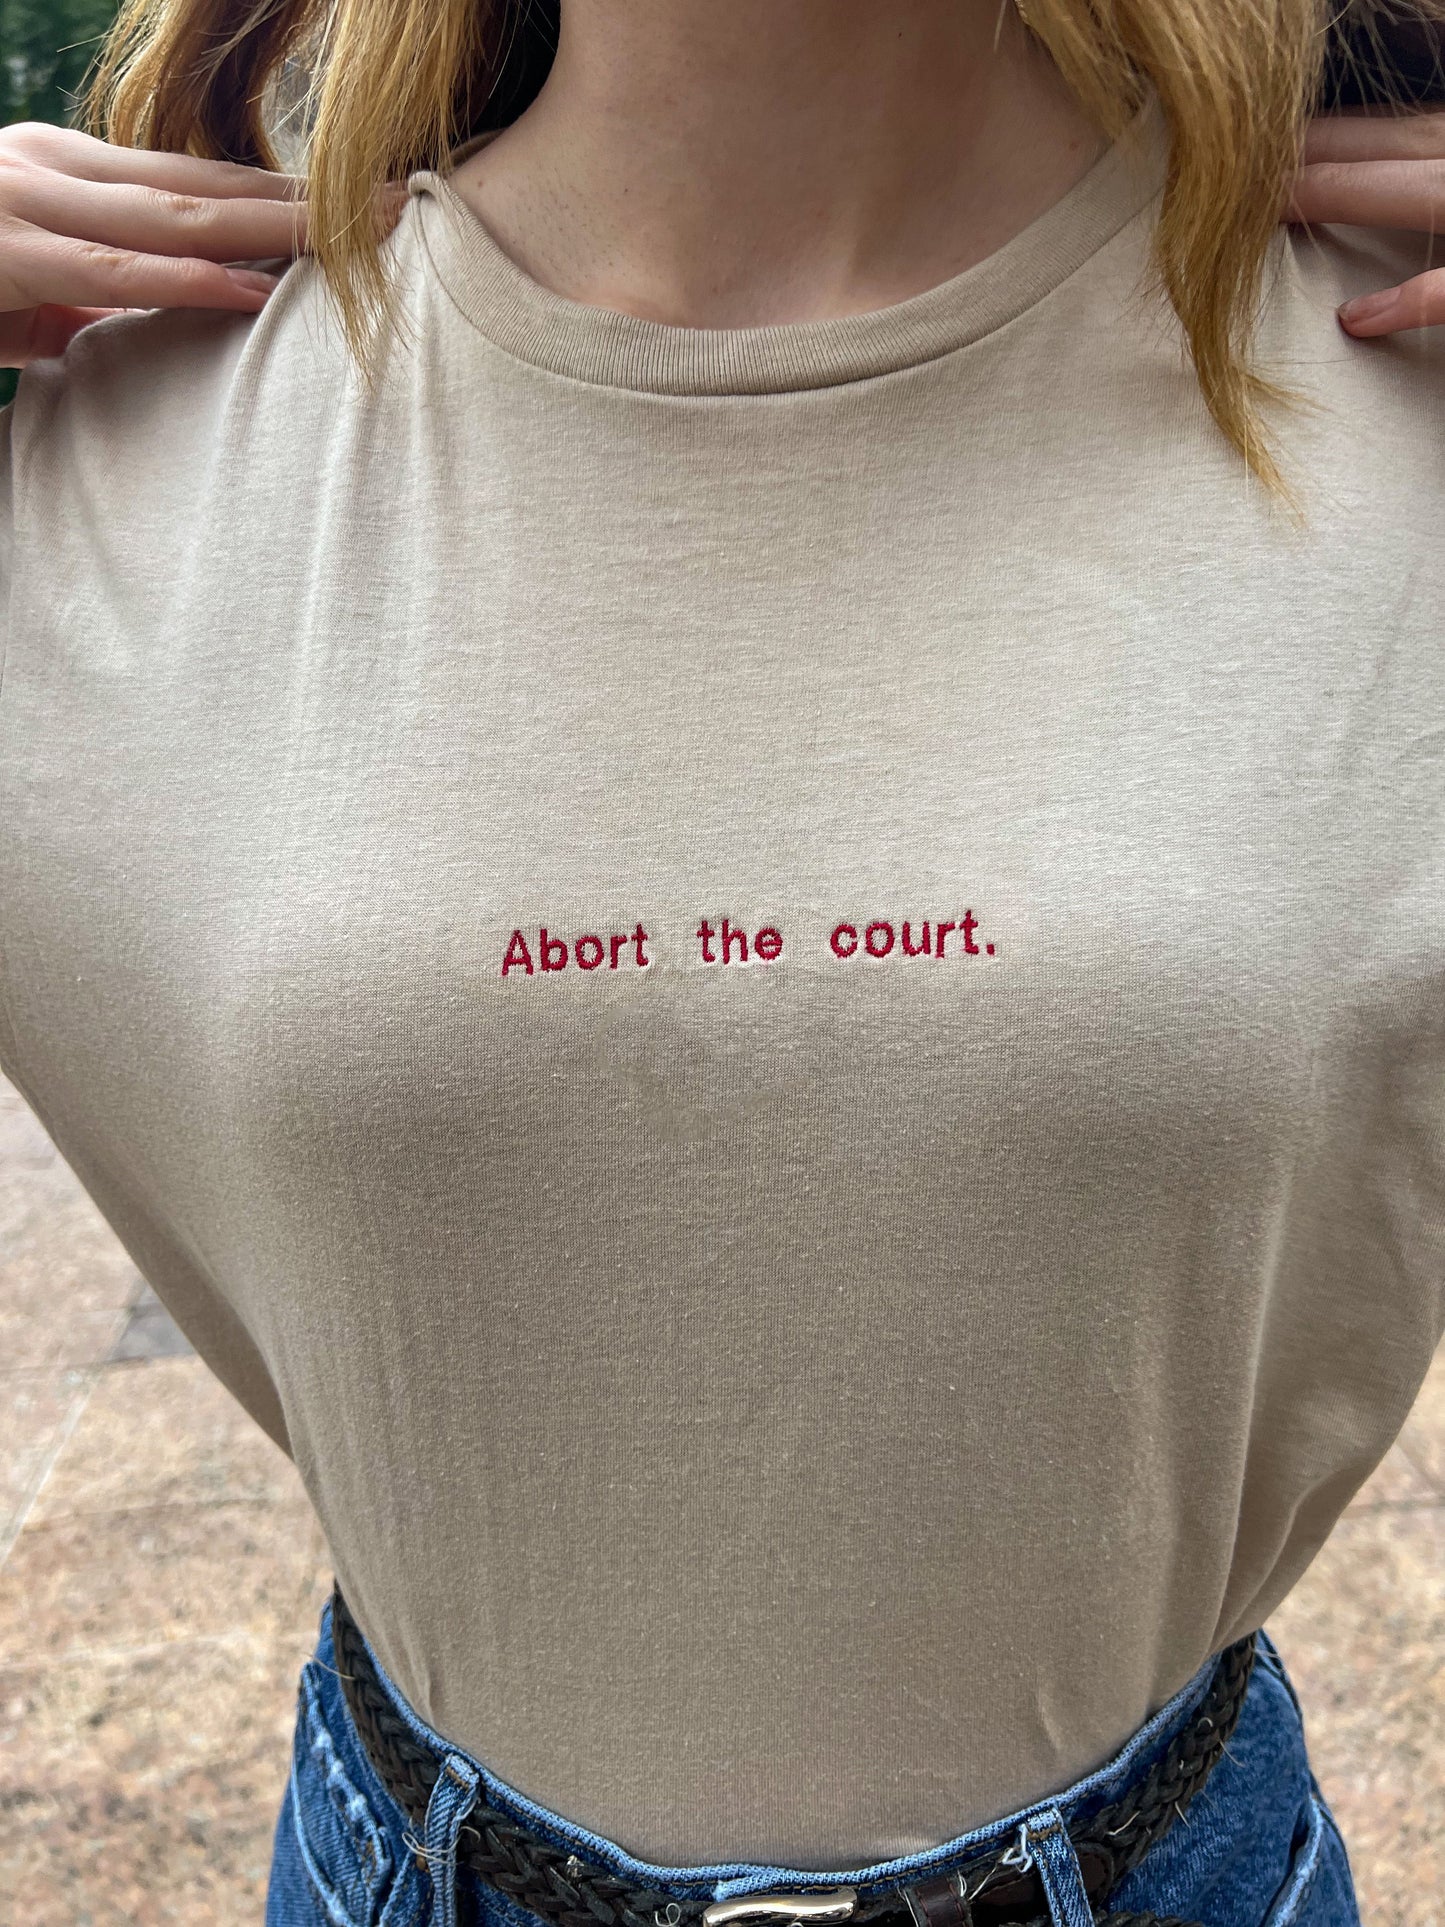 “Abort the court” shirt